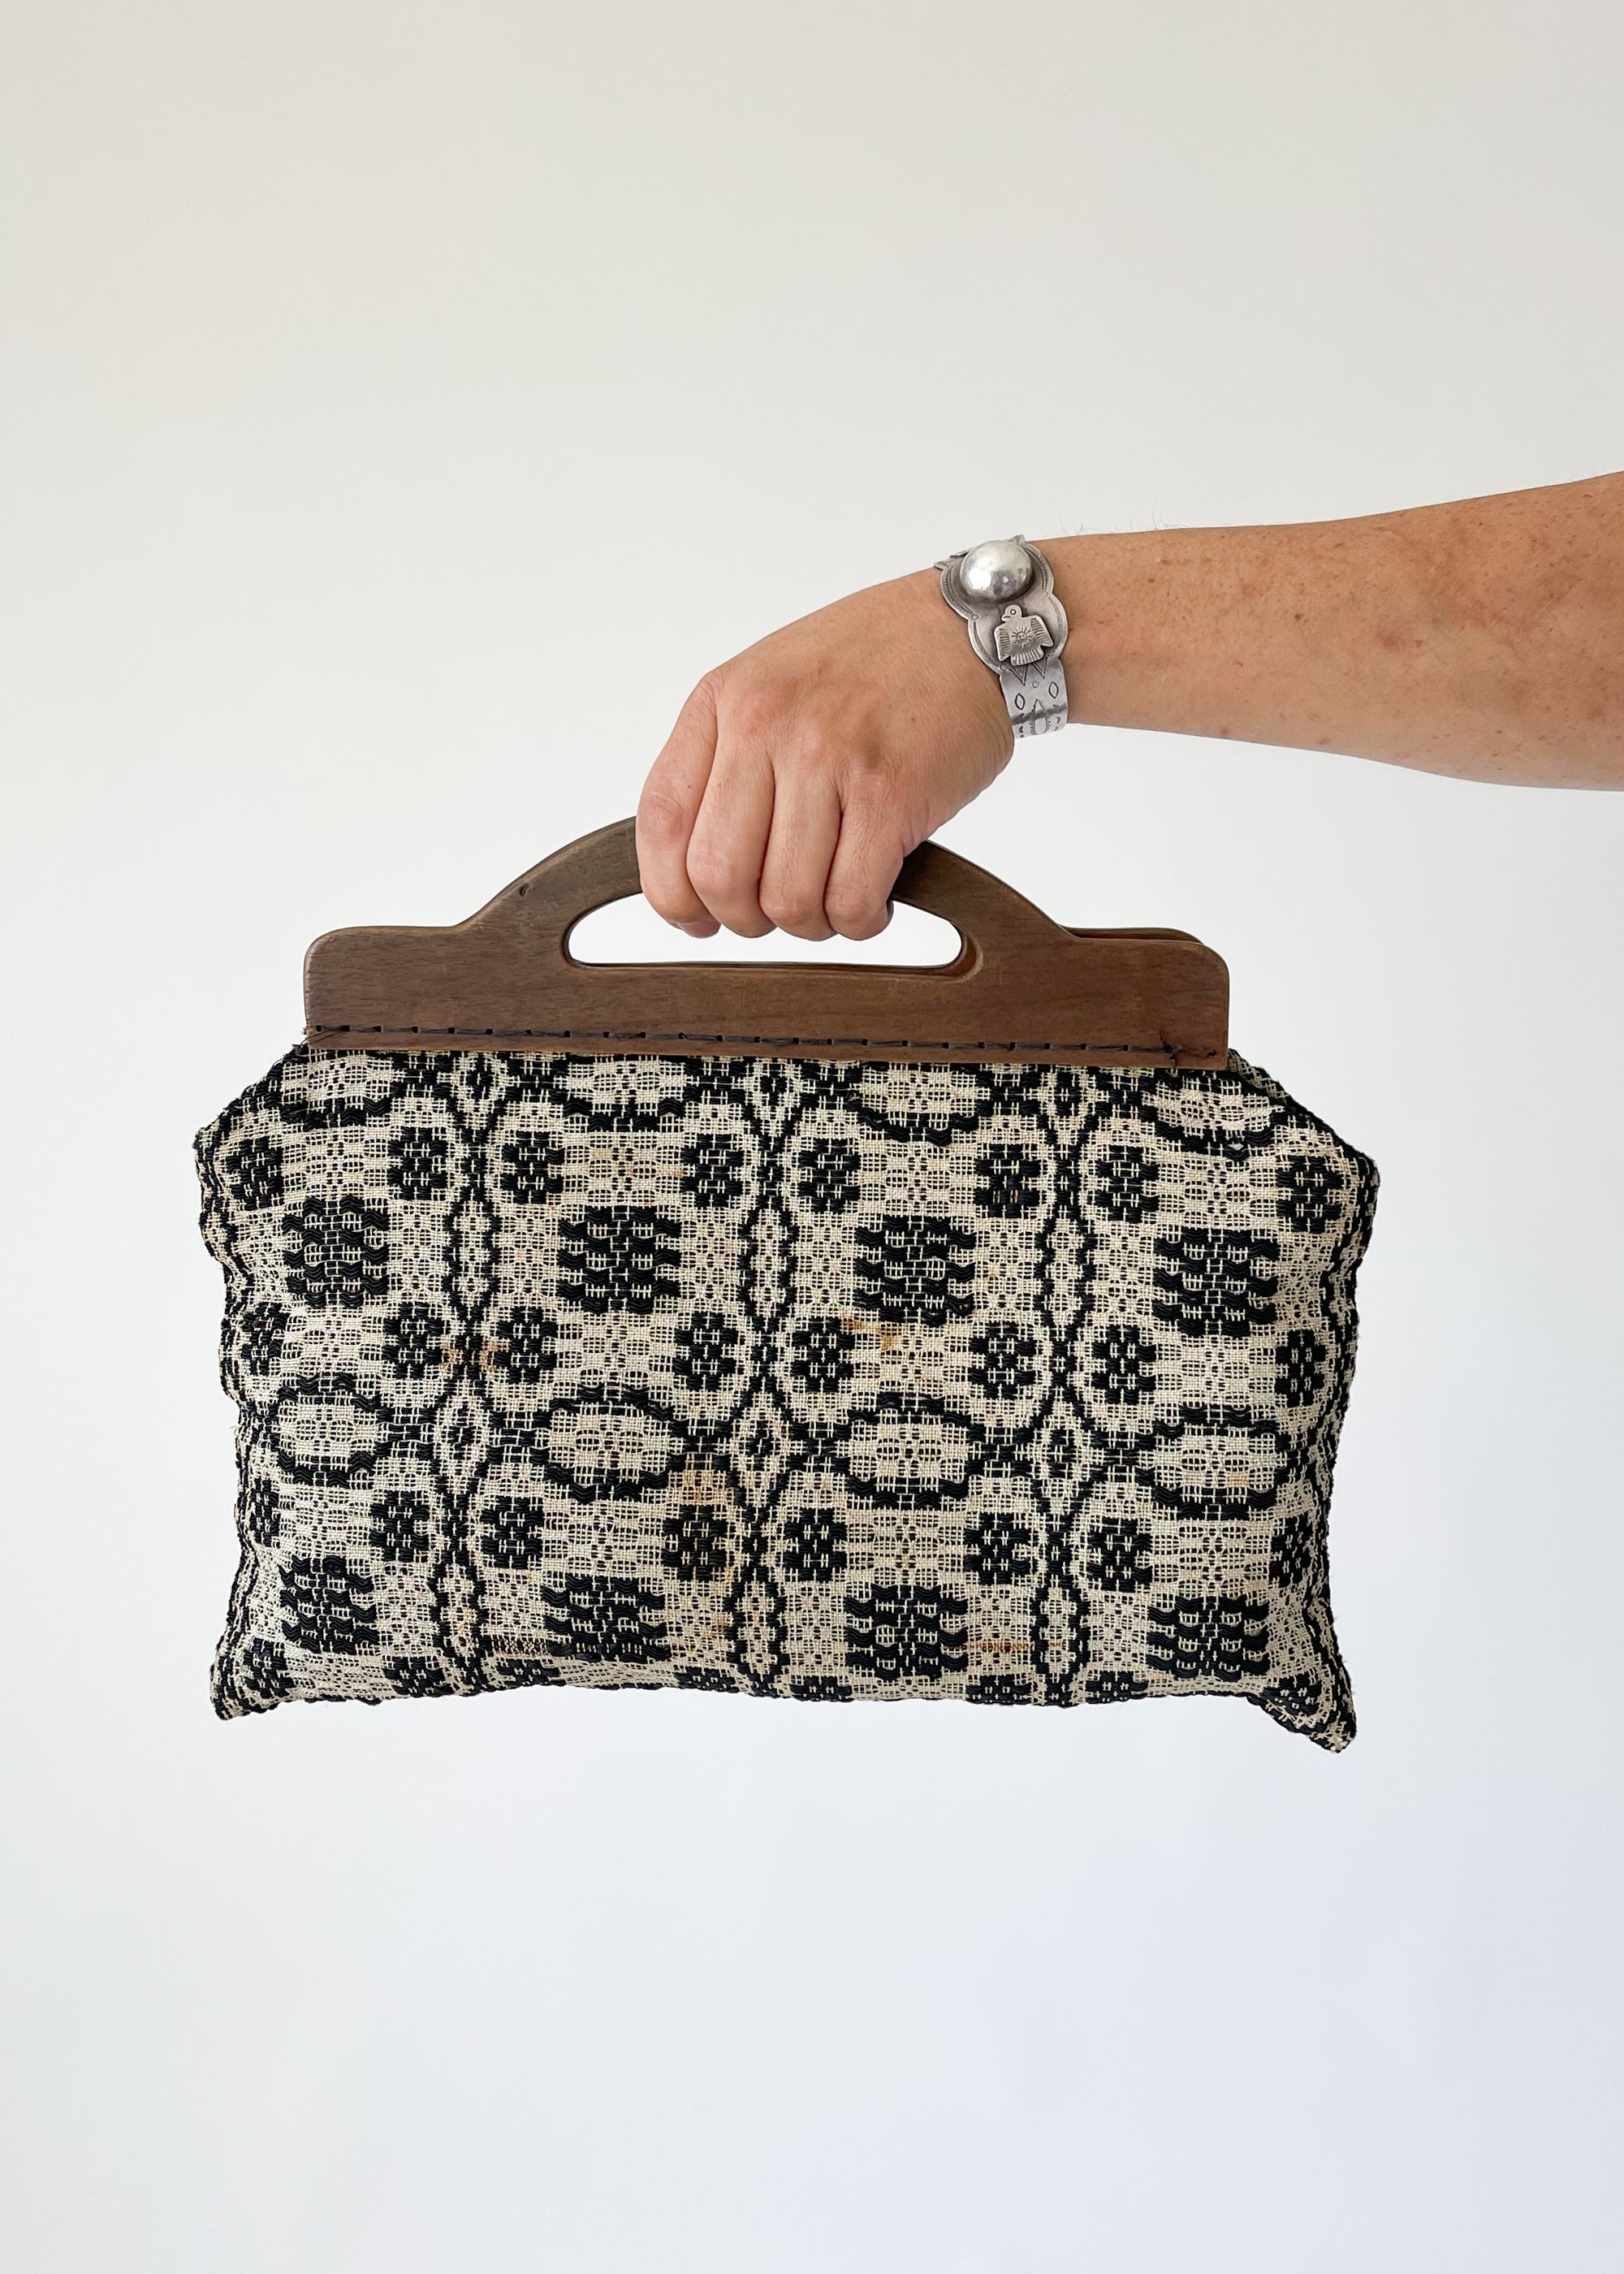 Isabella Fiore Wooden Handles Clutch Purse Bag | eBay